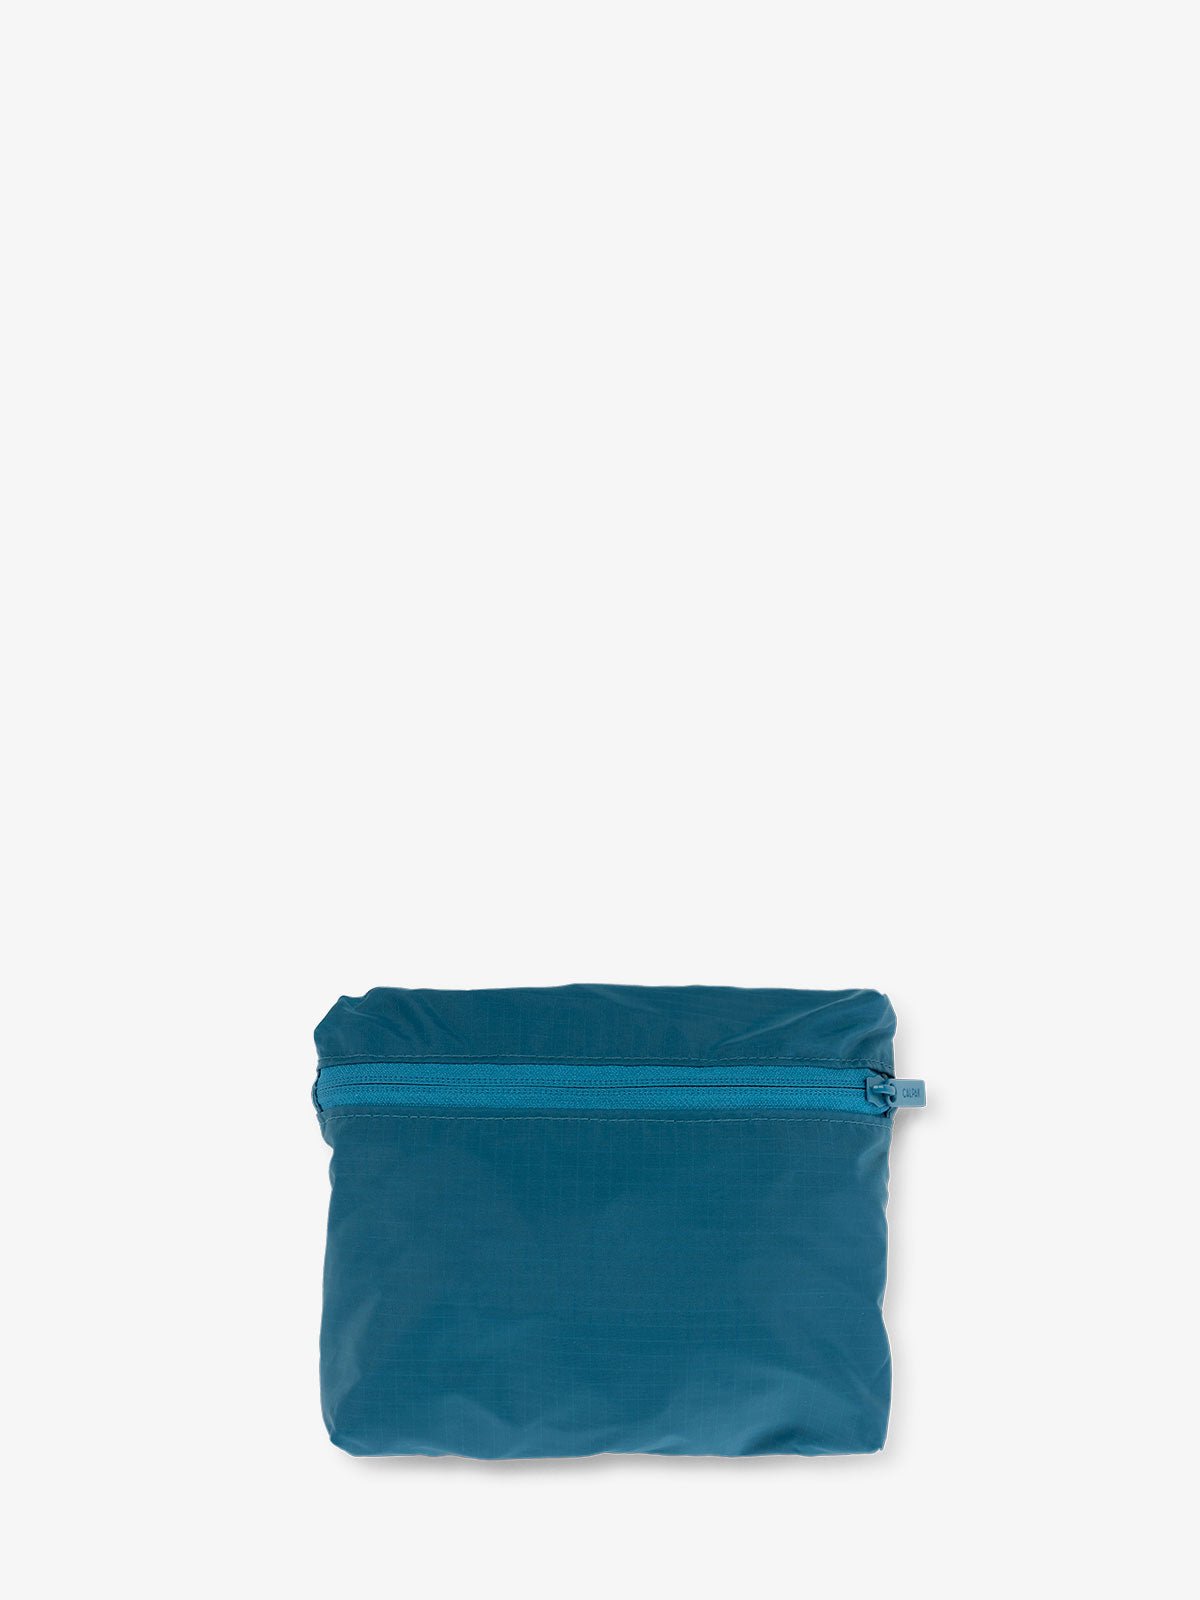 CALPAK Compakt foldable tote bag in lagoon